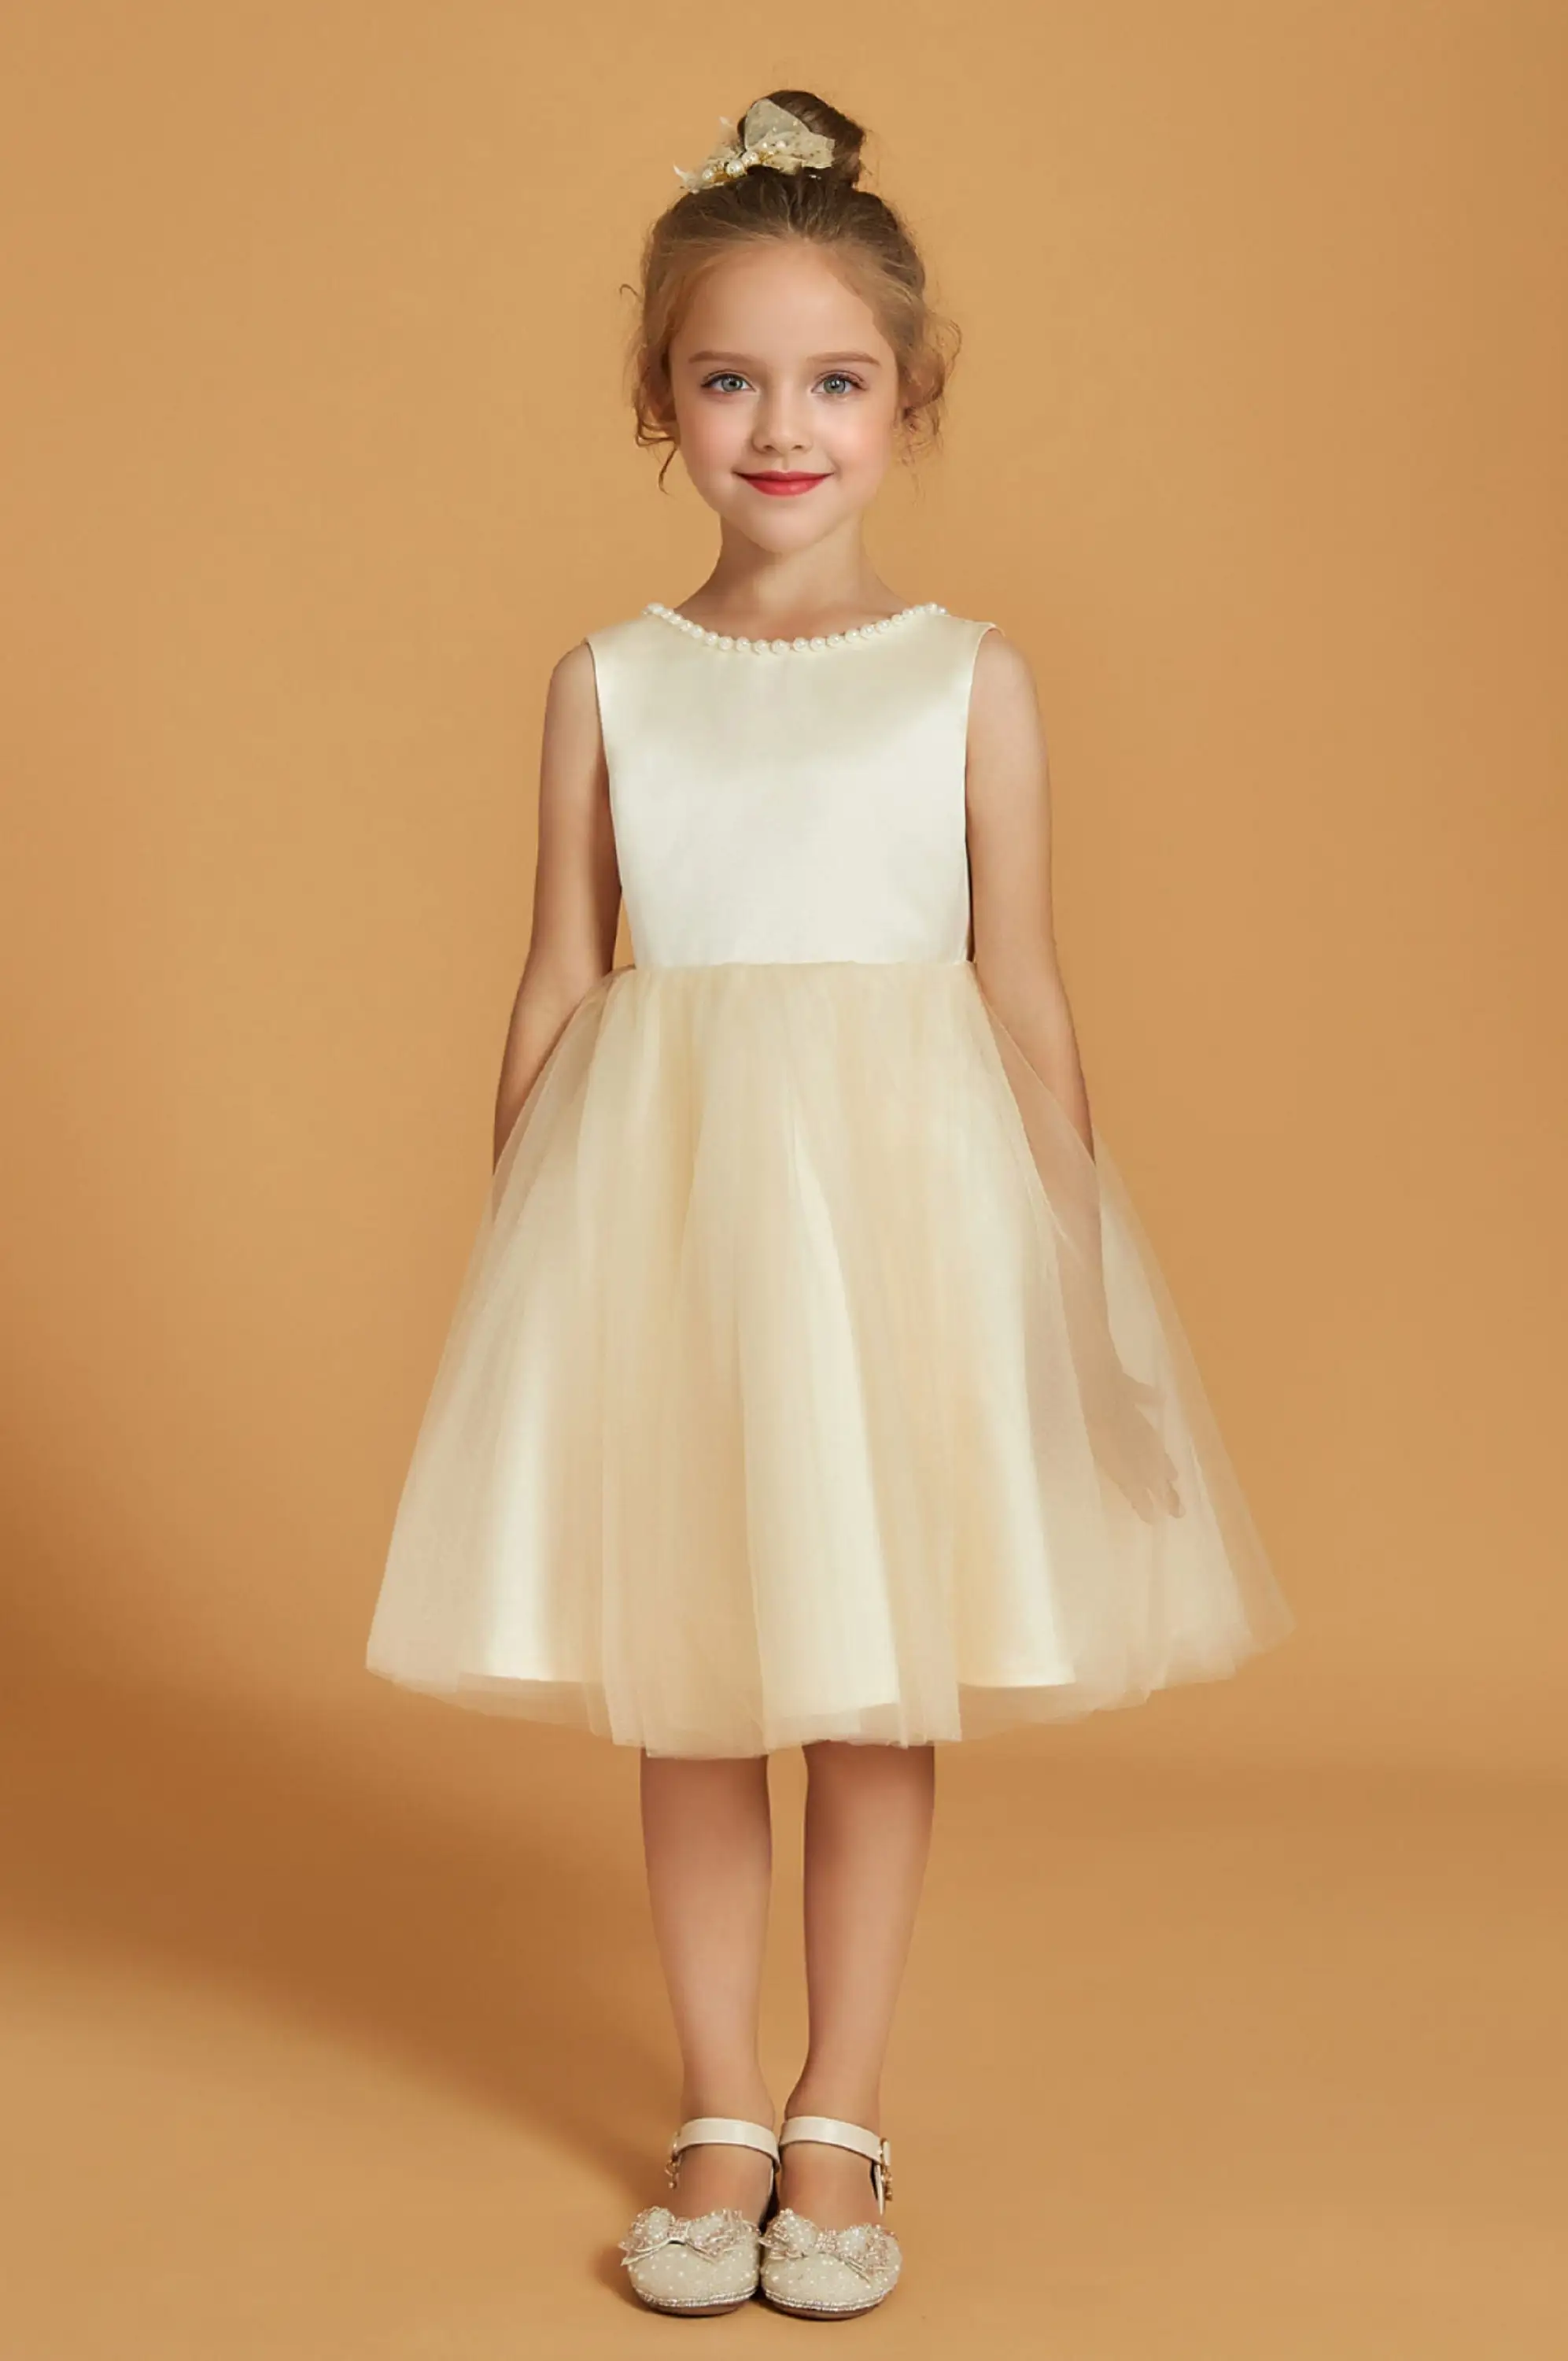 

YZYmanualroom Short Girl Dress Toddler Flower Girl Baptism Christening Wedding Communion Princess Party /Custom Made